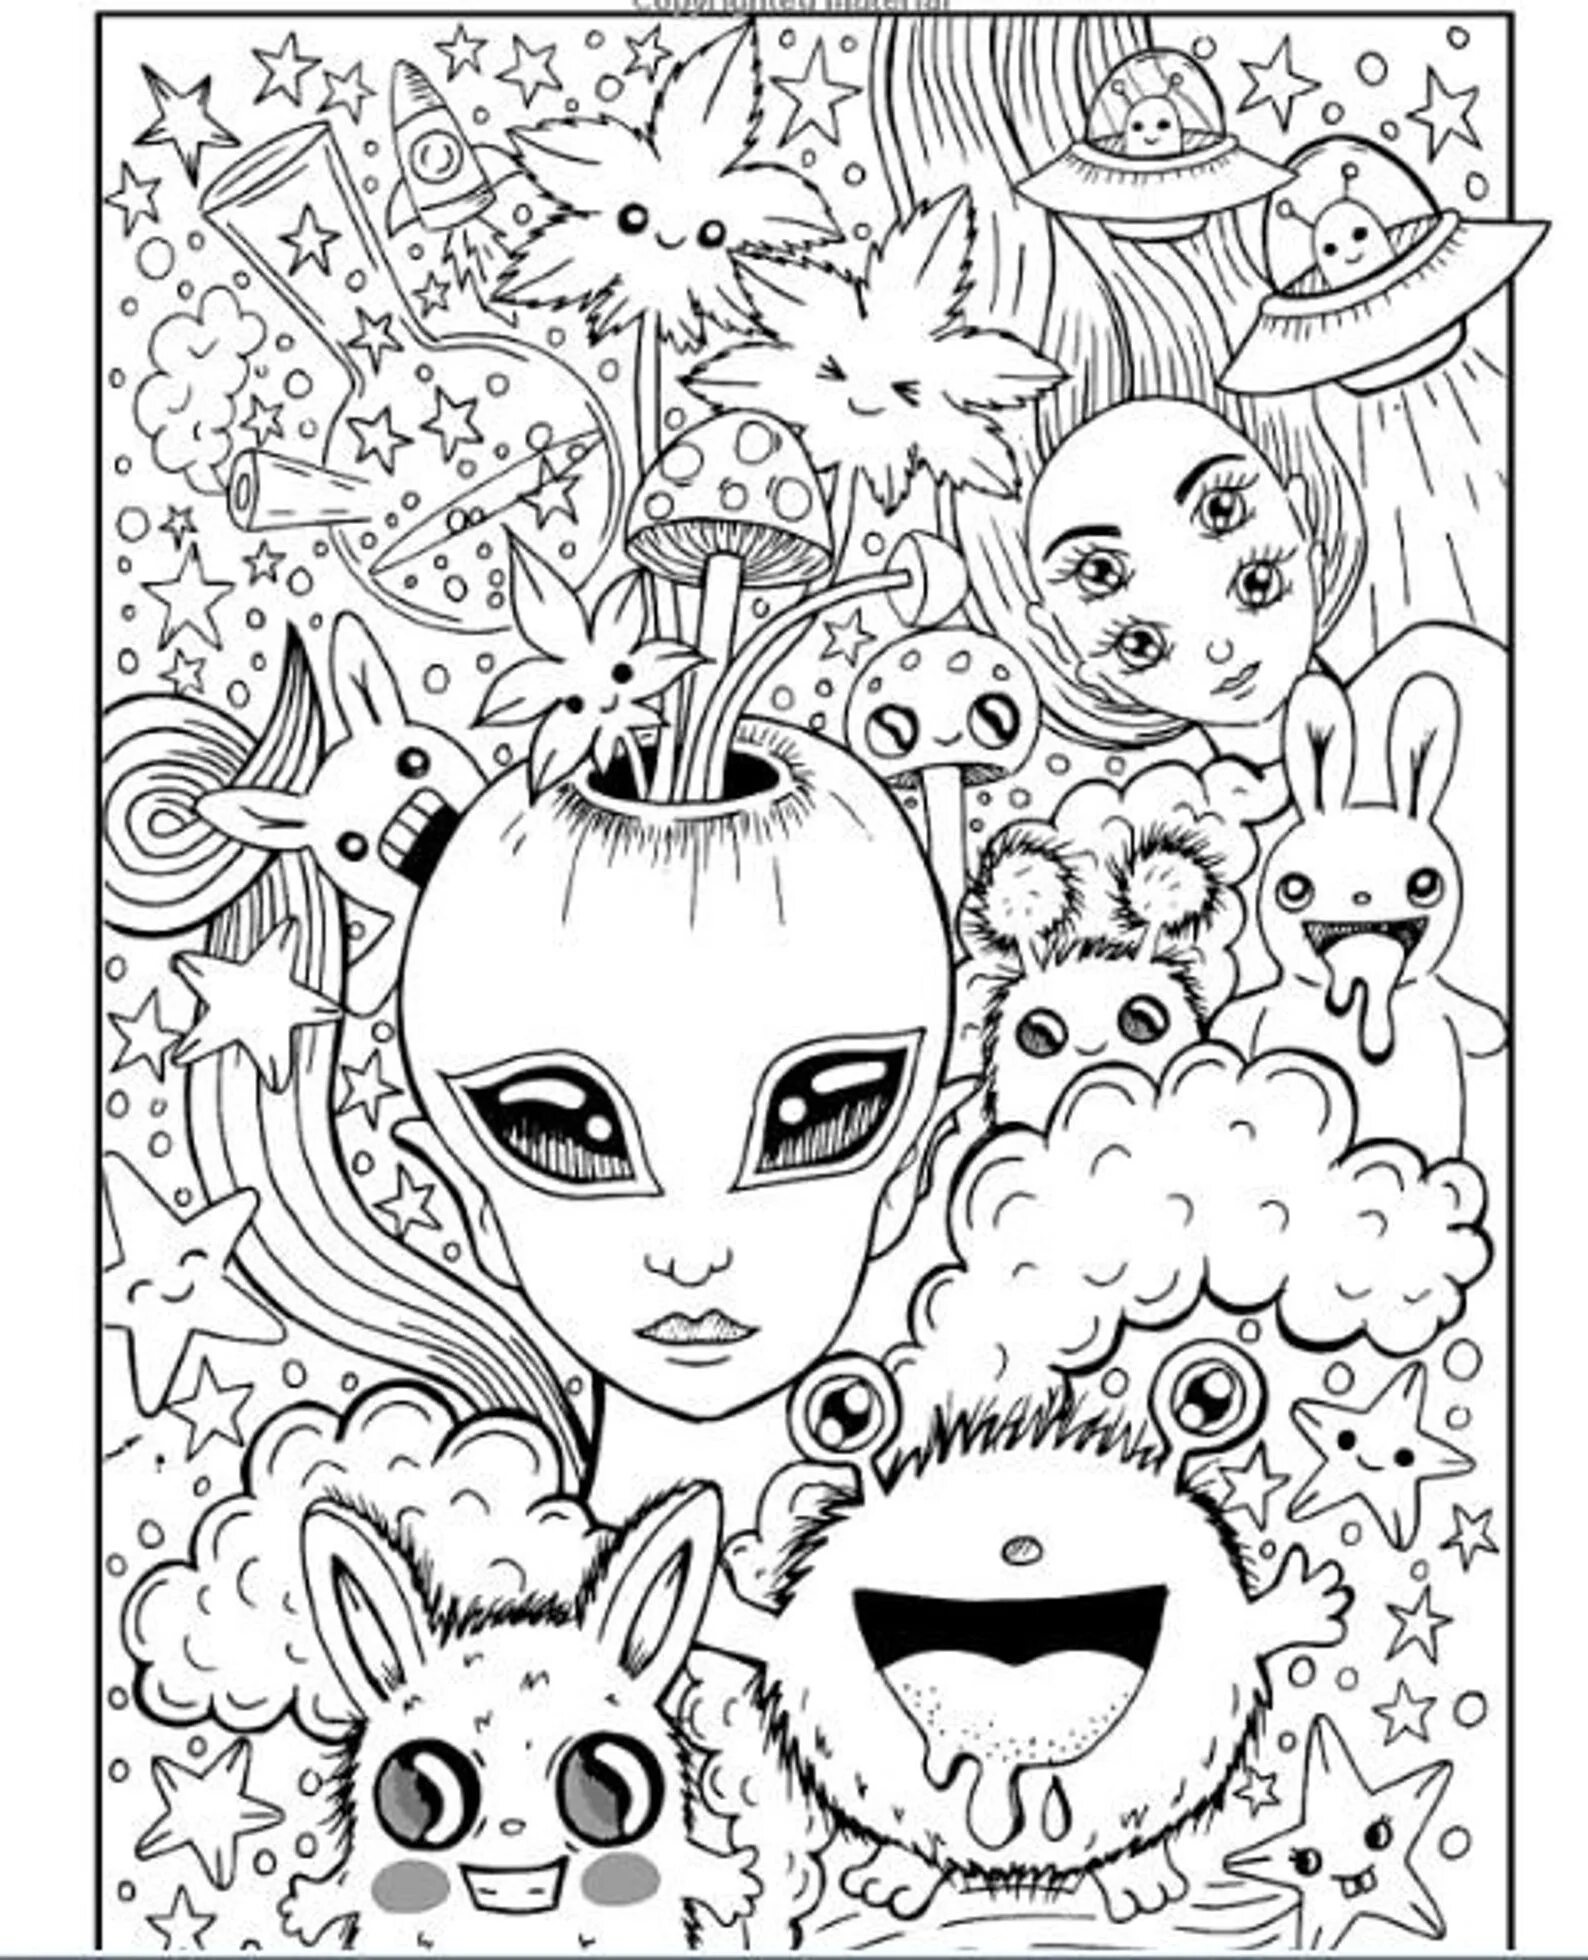 Joyful psychedelic coloring book